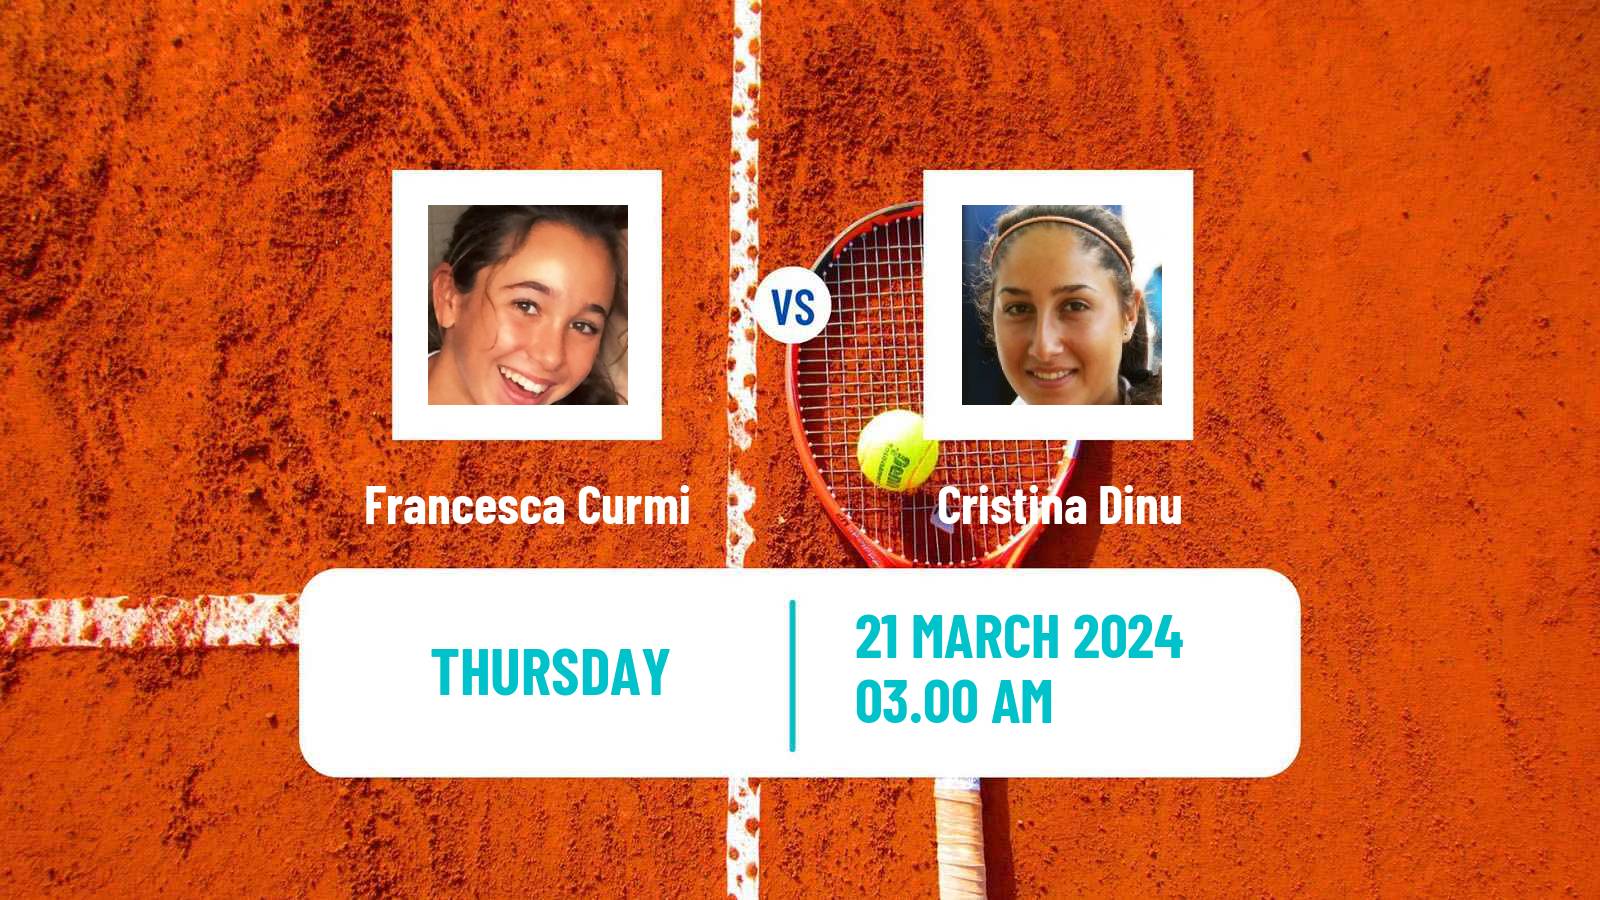 Tennis ITF W35 Alaminos Larnaca 2 Women Francesca Curmi - Cristina Dinu